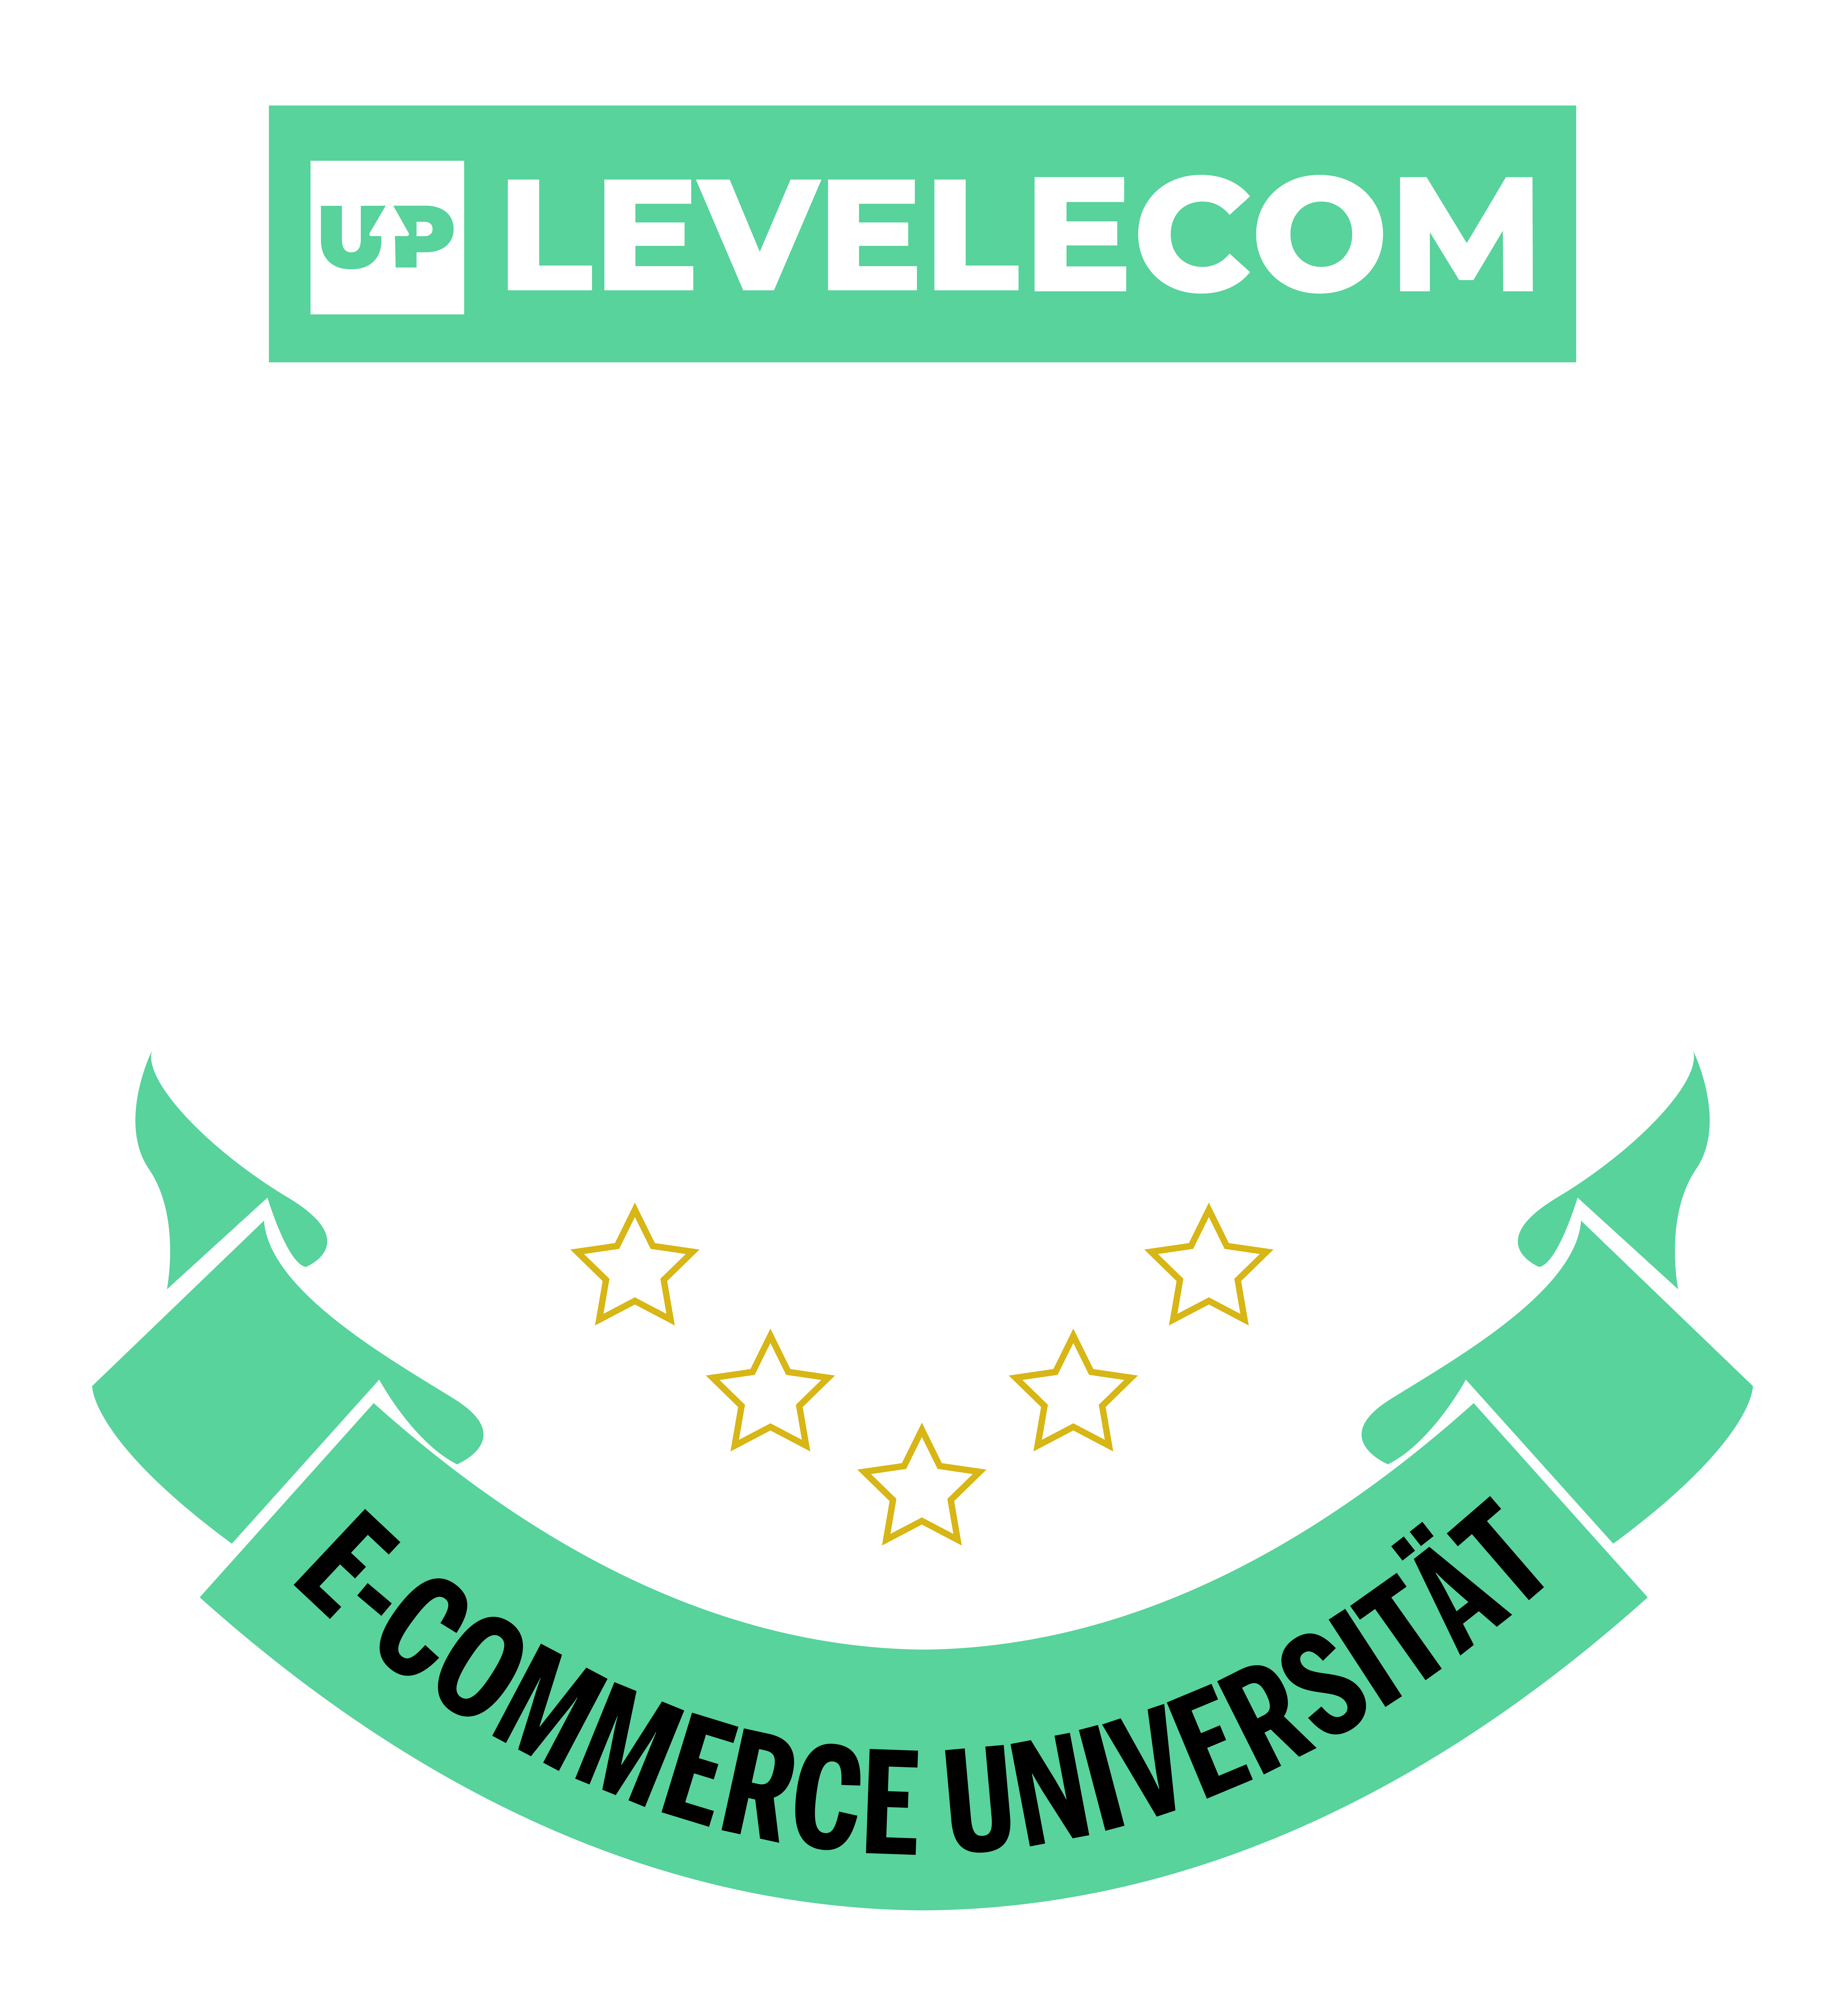 UpLevelEcom Logo